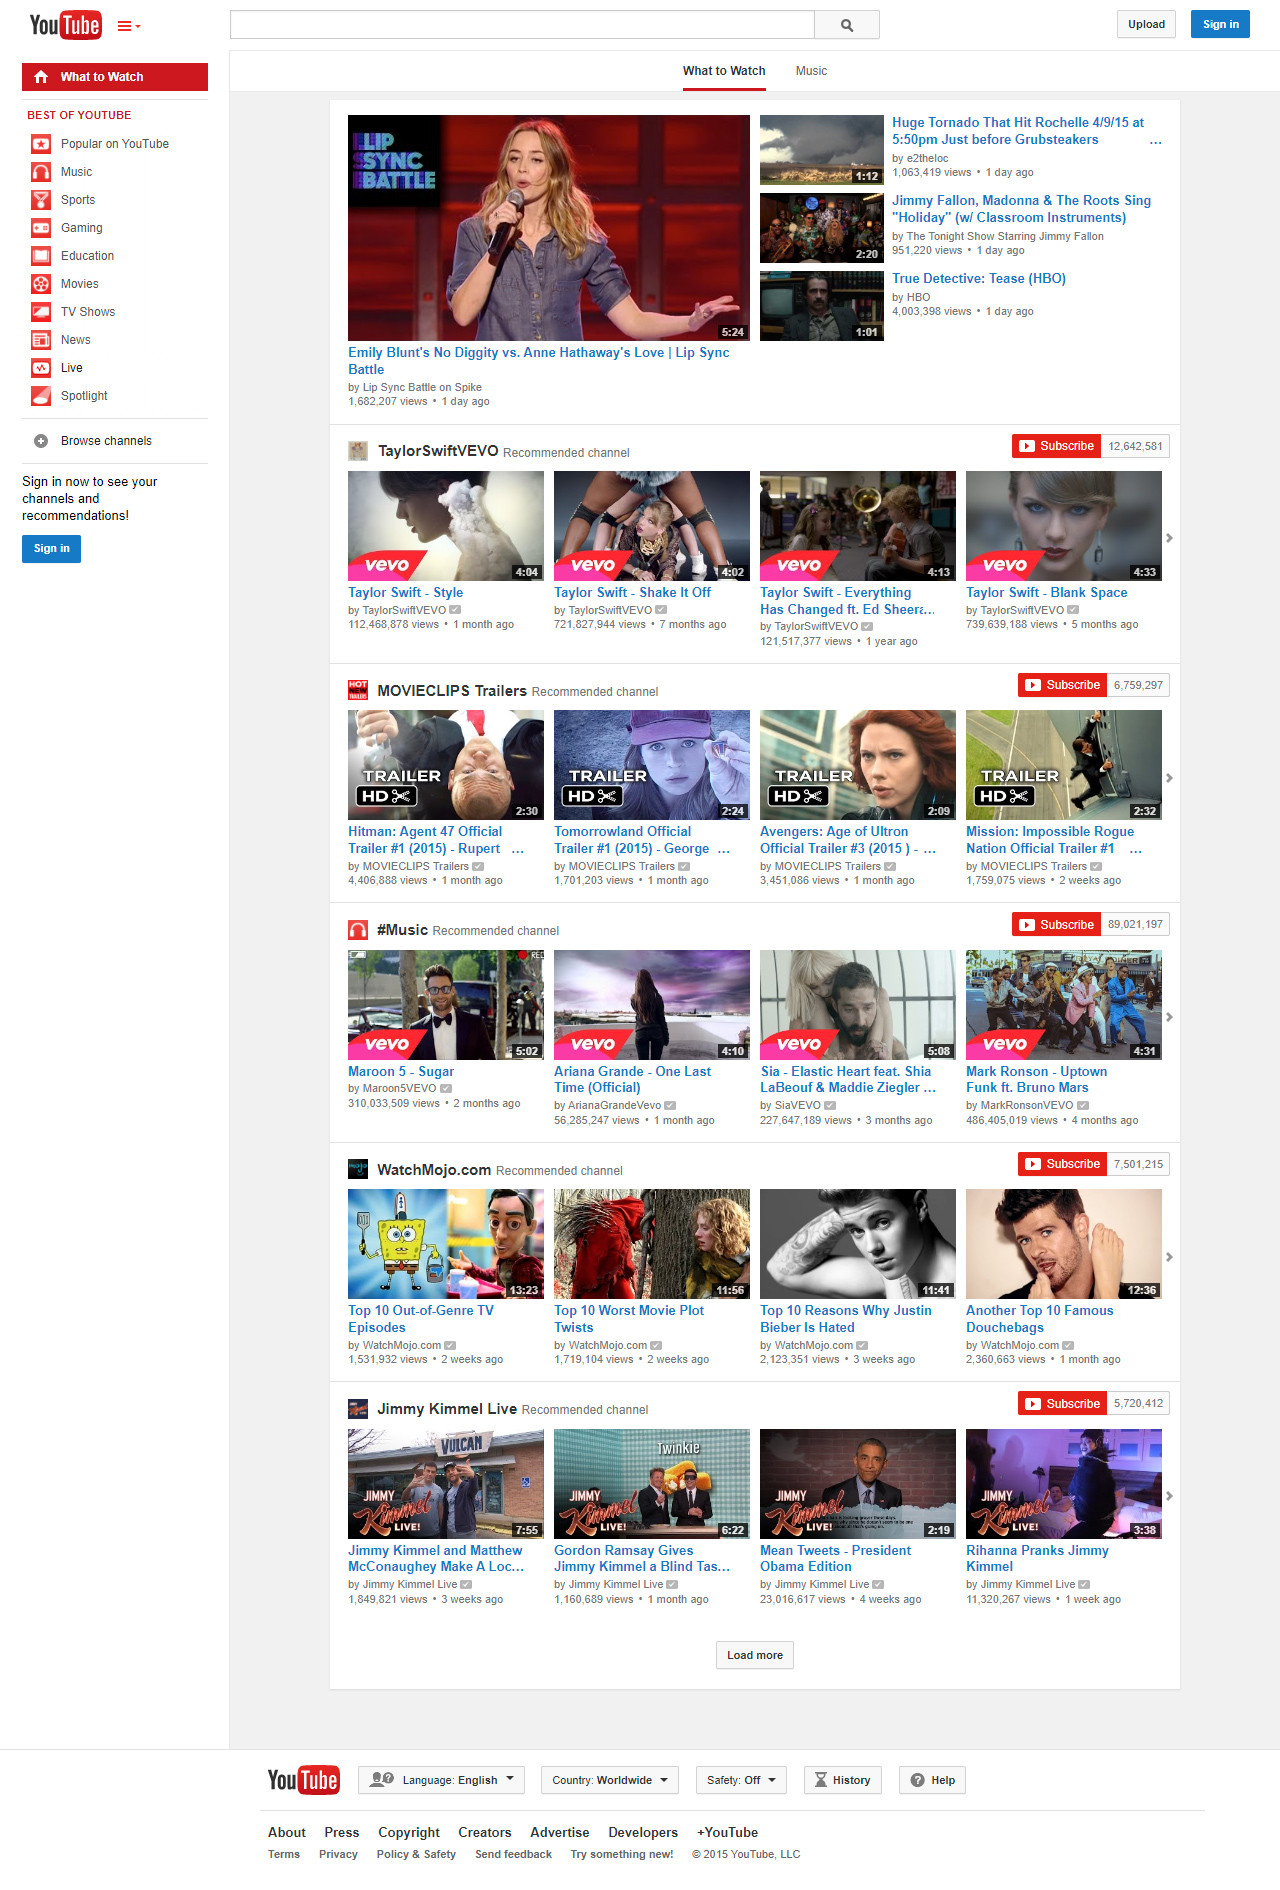 YouTube website in 2015